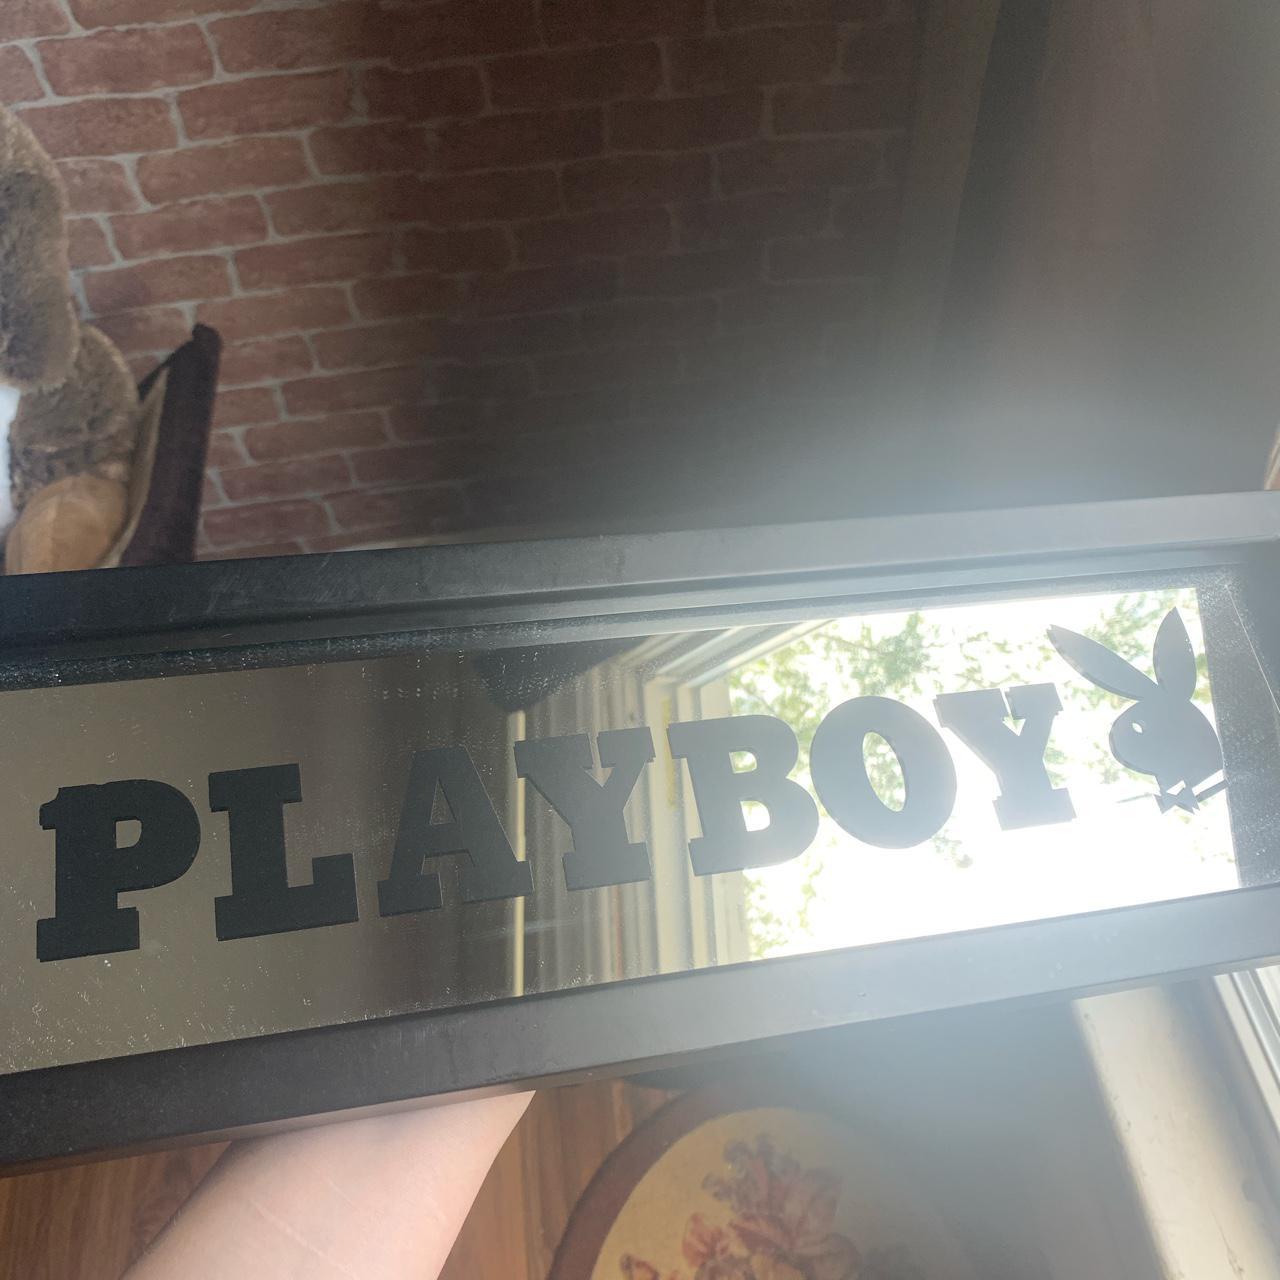 Playboy Handheld Mirror